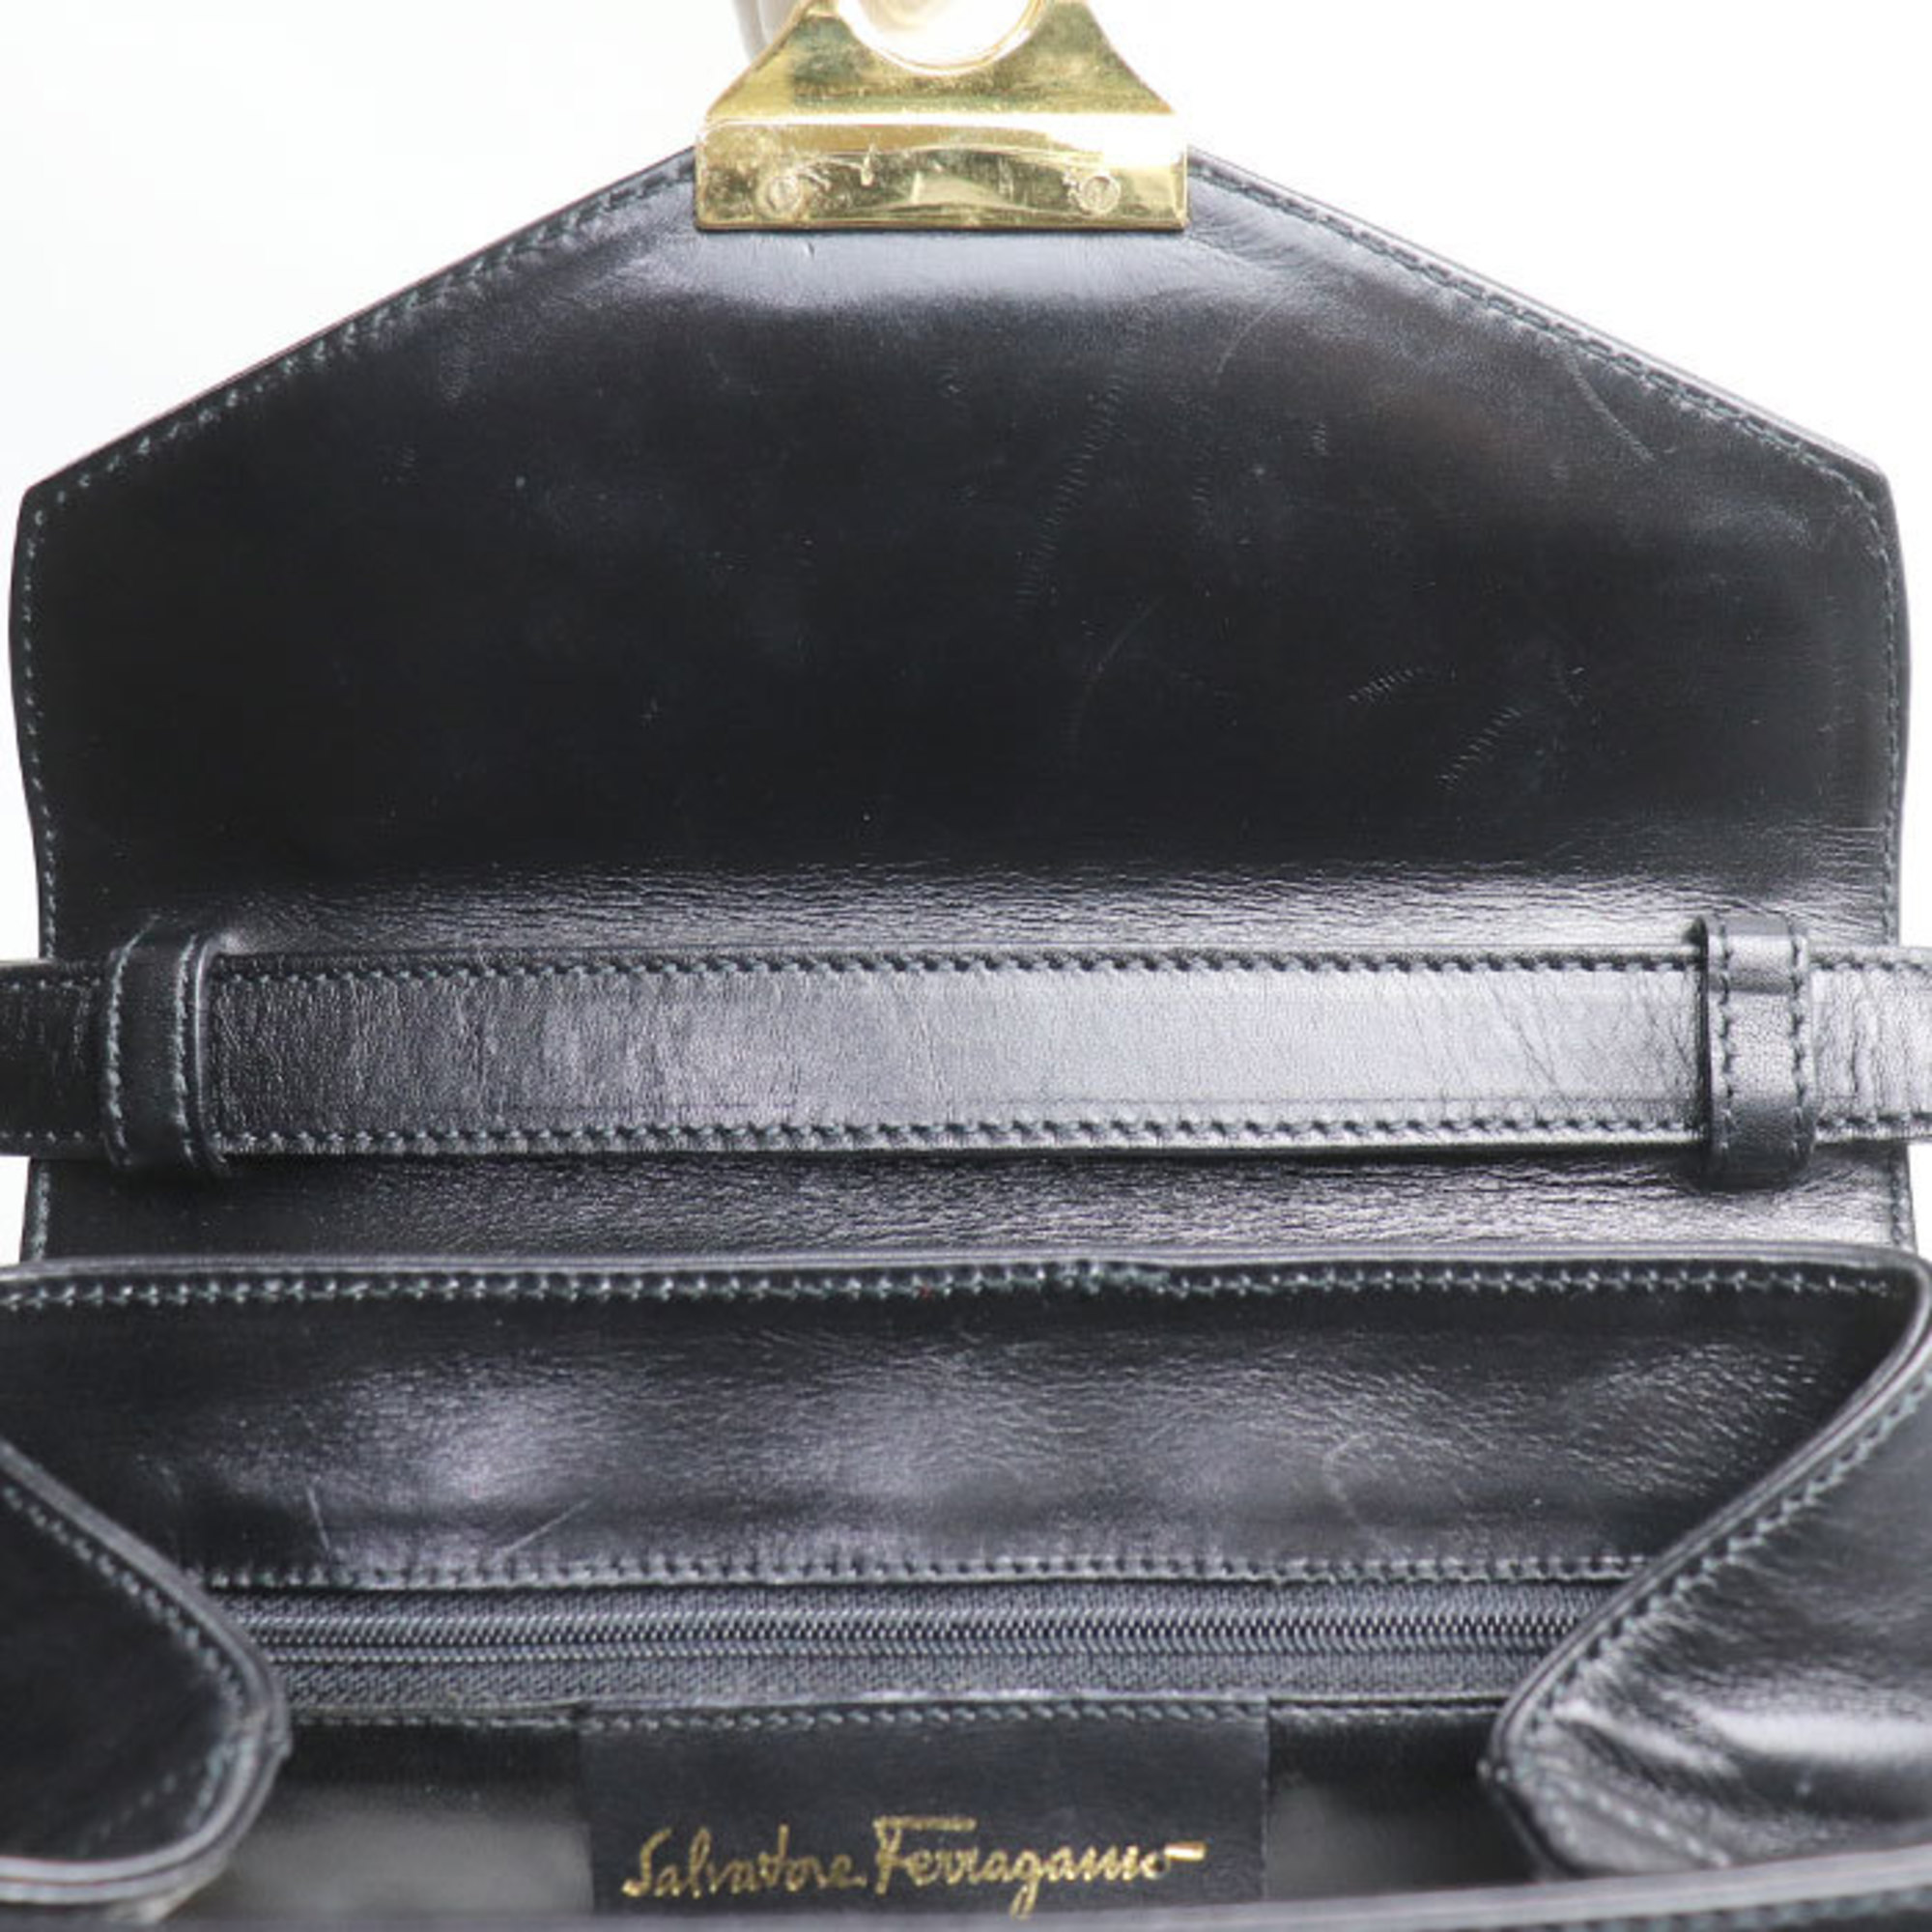 Salvatore Ferragamo 2-Way Shoulder Bag Black AN211668 Women's